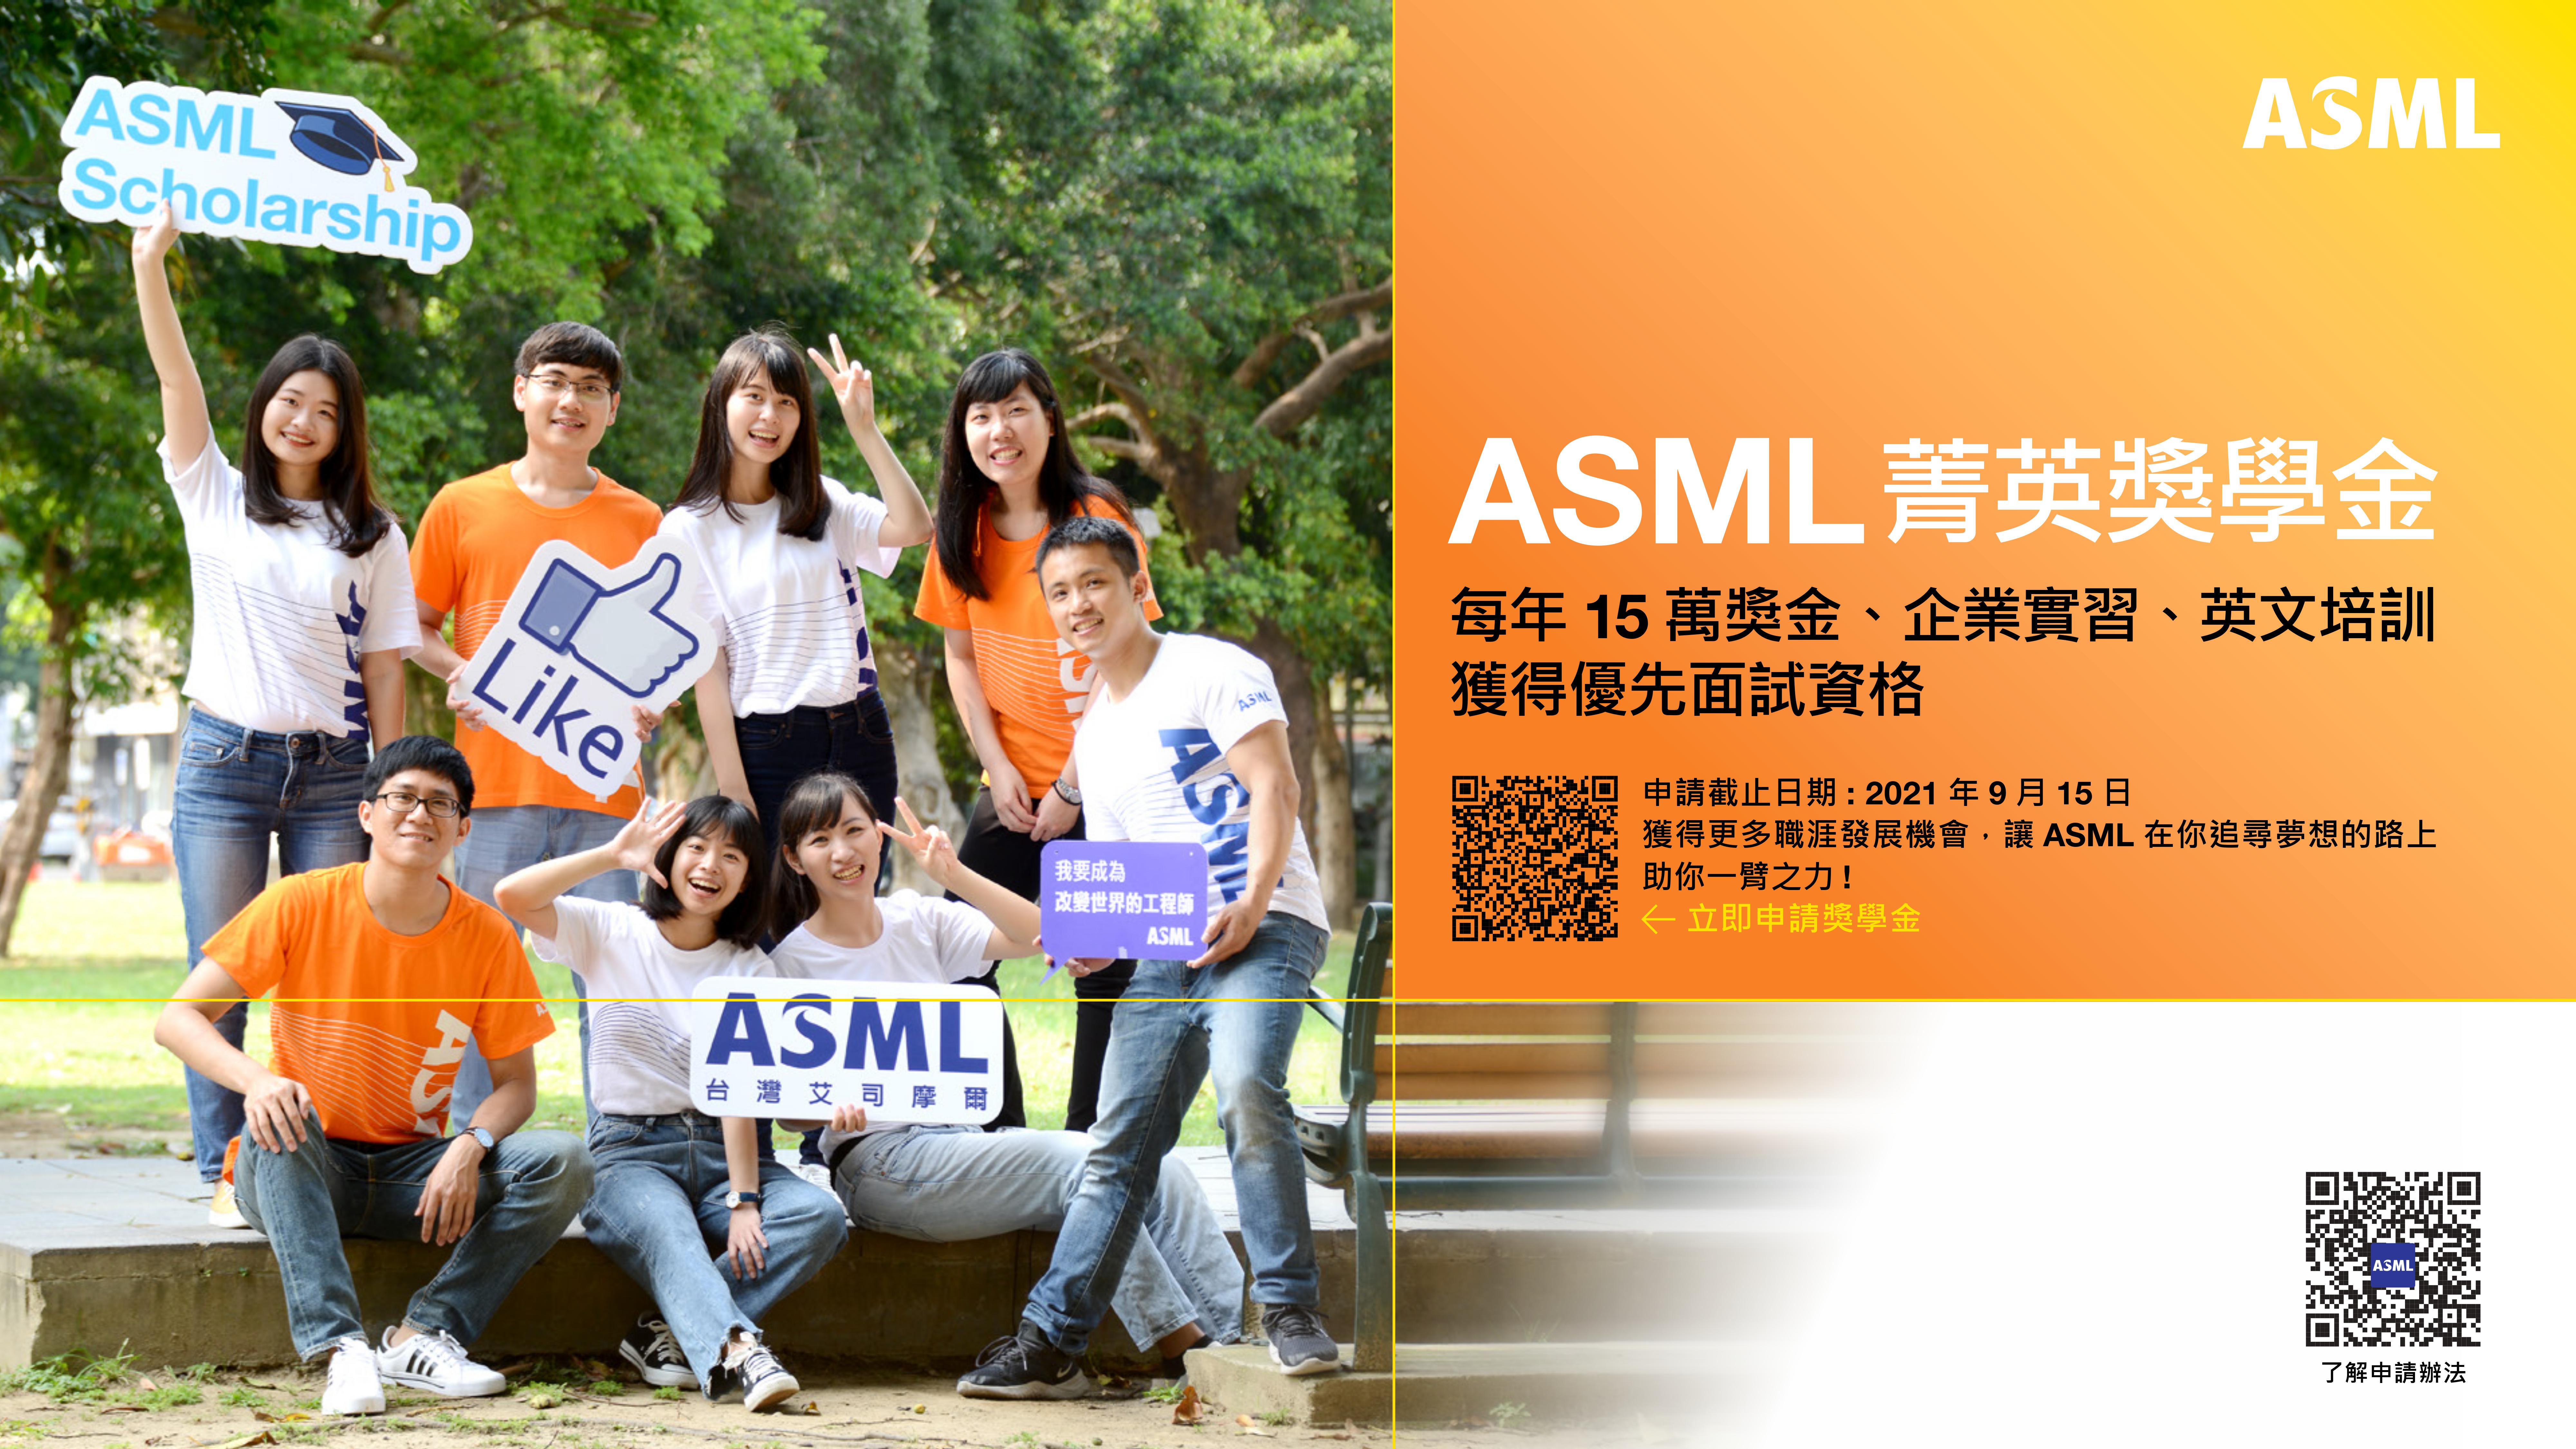 ASML菁英獎學金宣傳海報